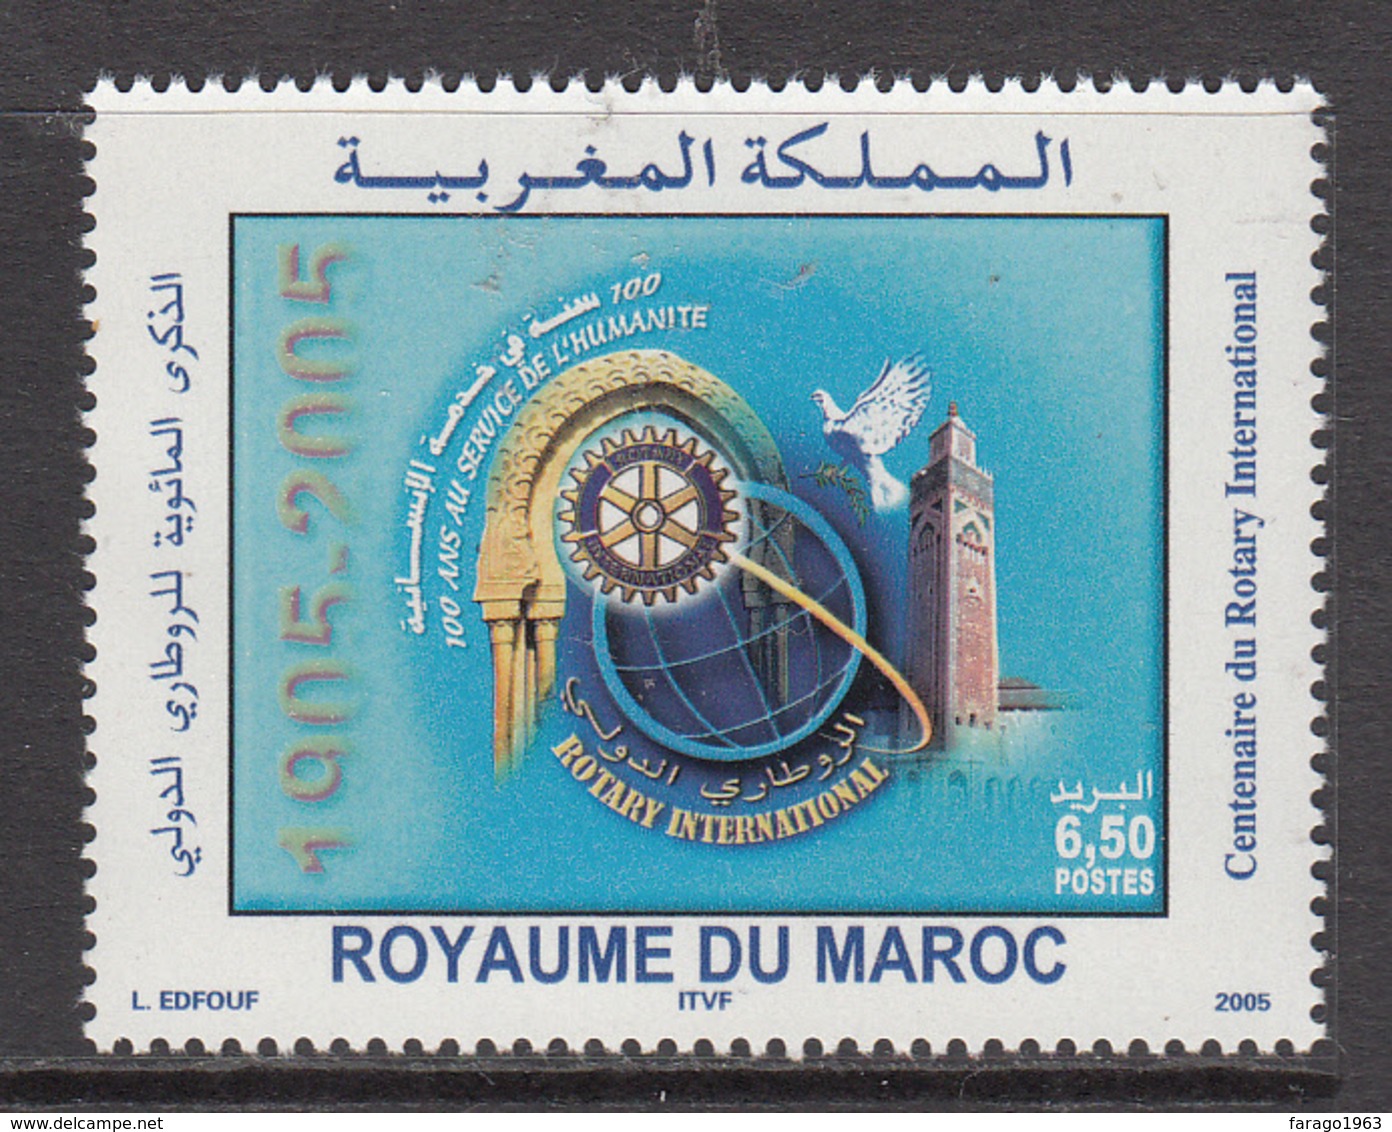 2005 Morocco Maroc  Rotary International Complete Set Of 1 MNH - Morocco (1956-...)